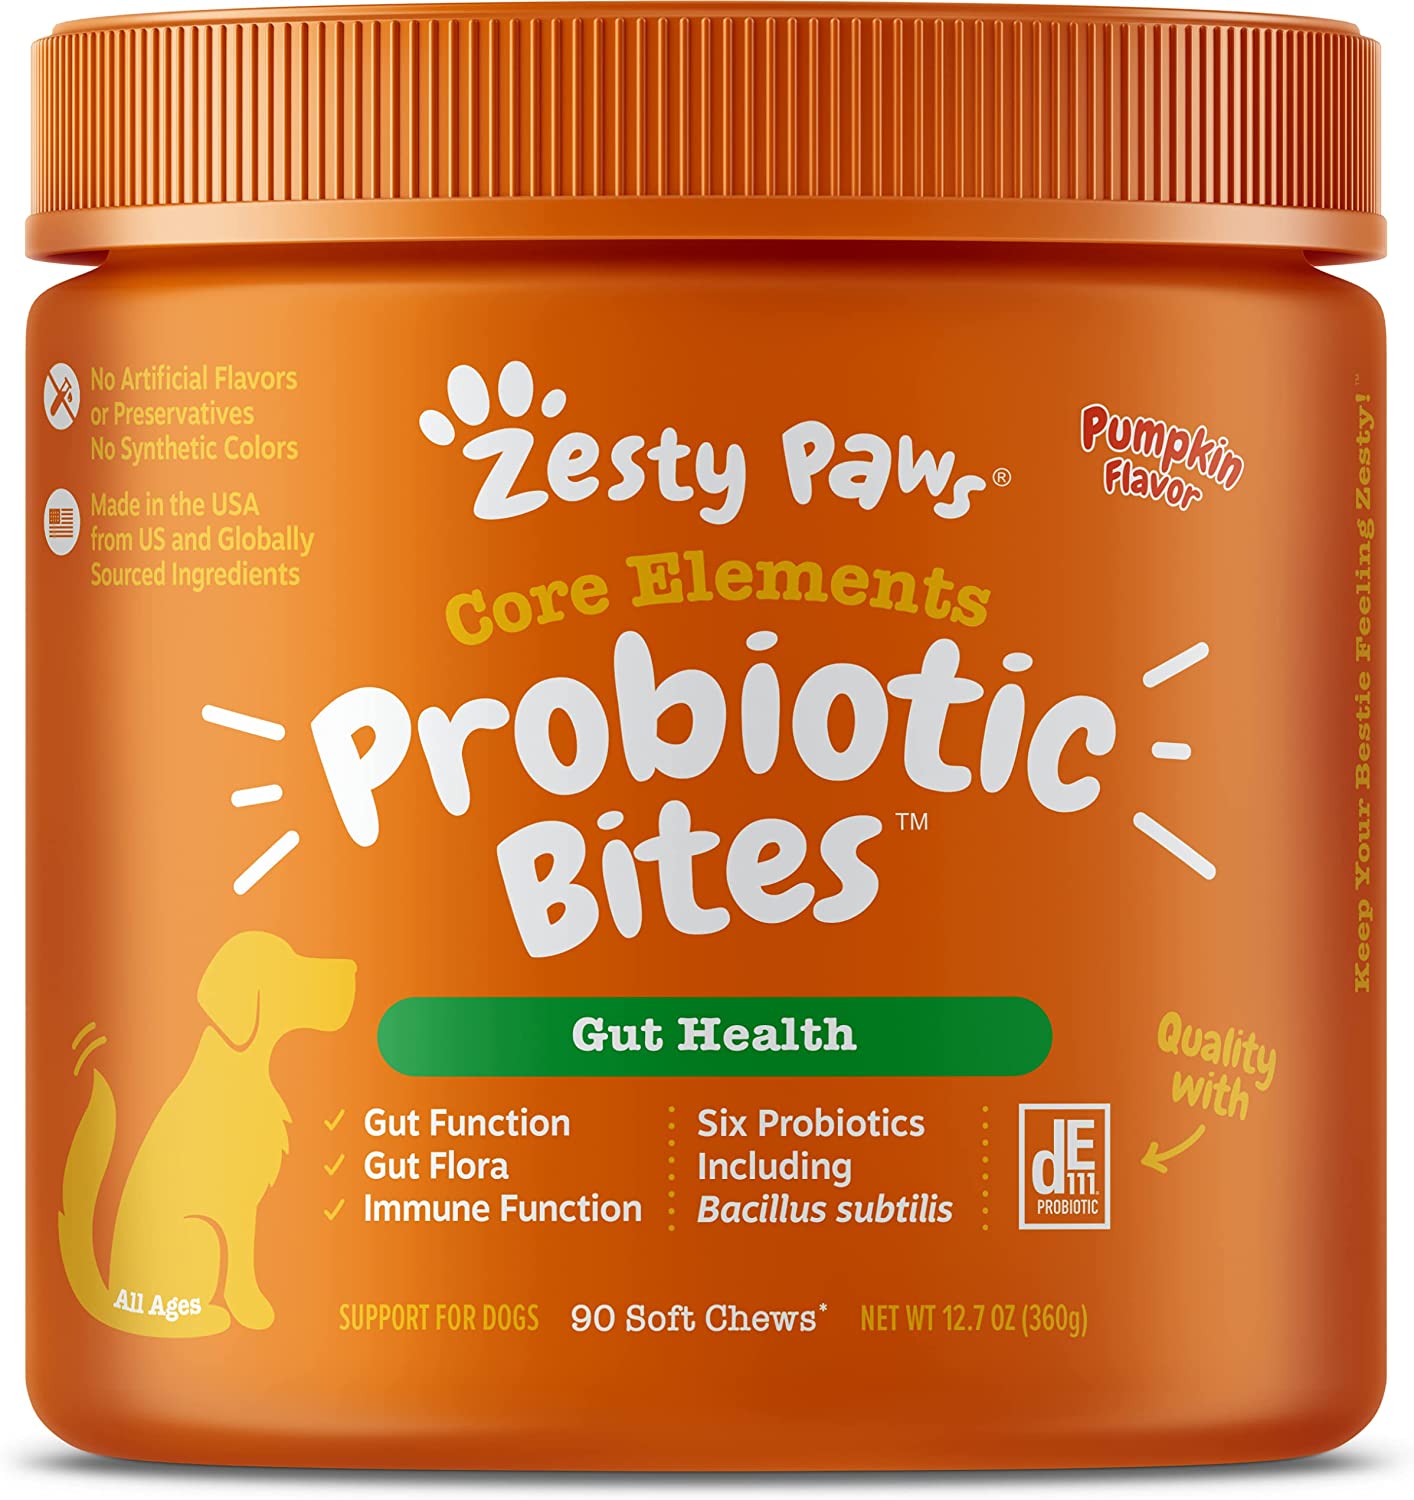 Zesty paws probiotics bites